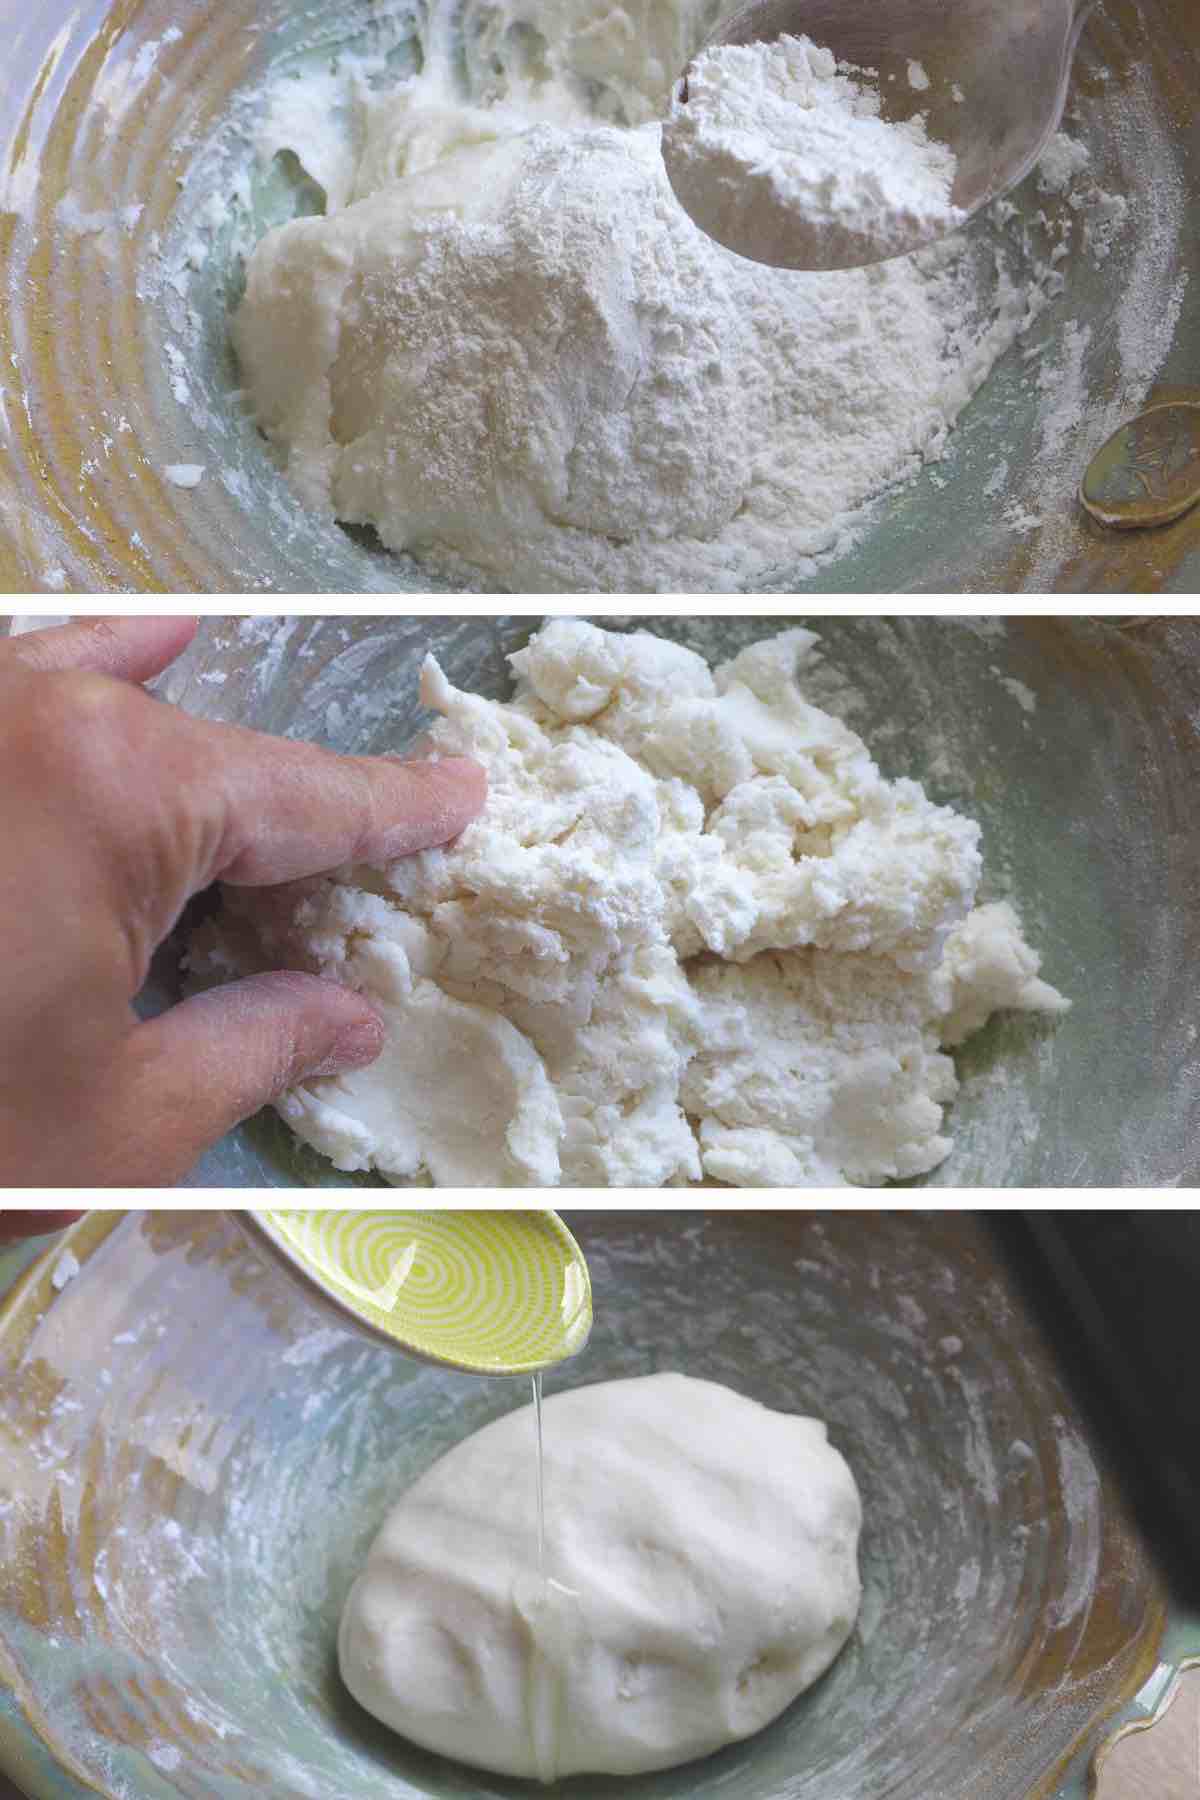 kneading glutinous rice flour into a dough.